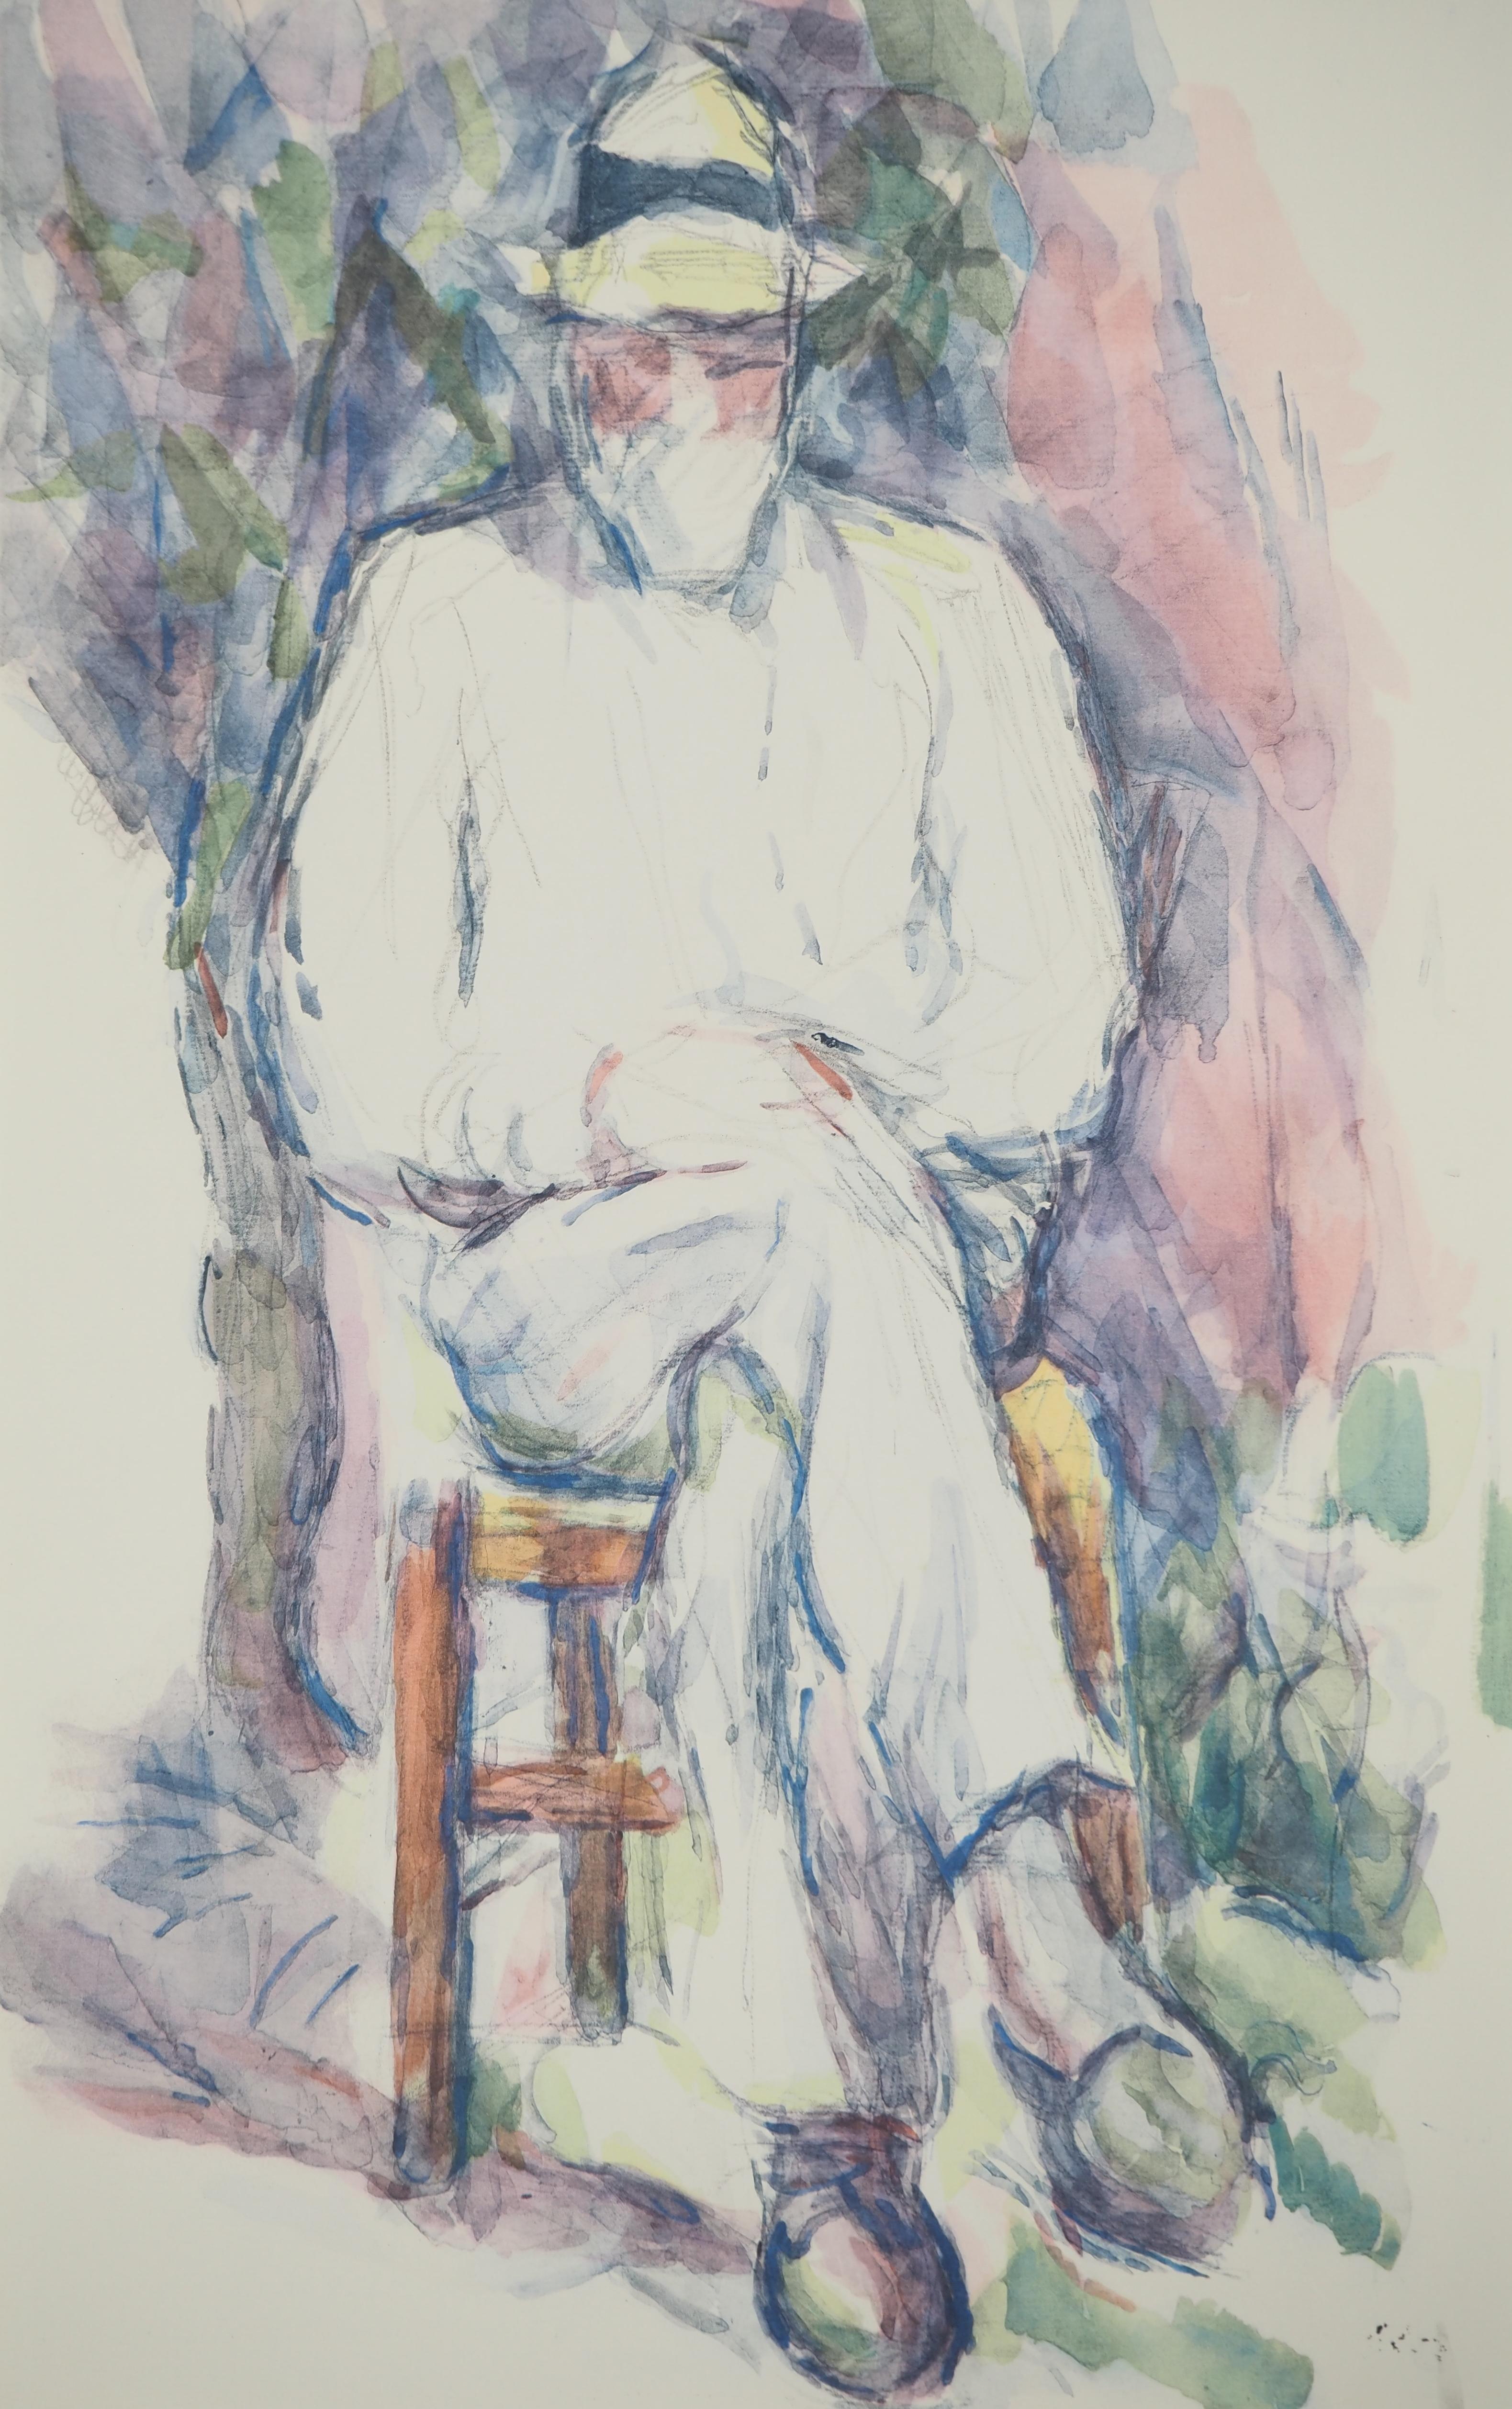 Portrait, The man with a hat - Lithograph, 1971 - Print by Paul Cézanne